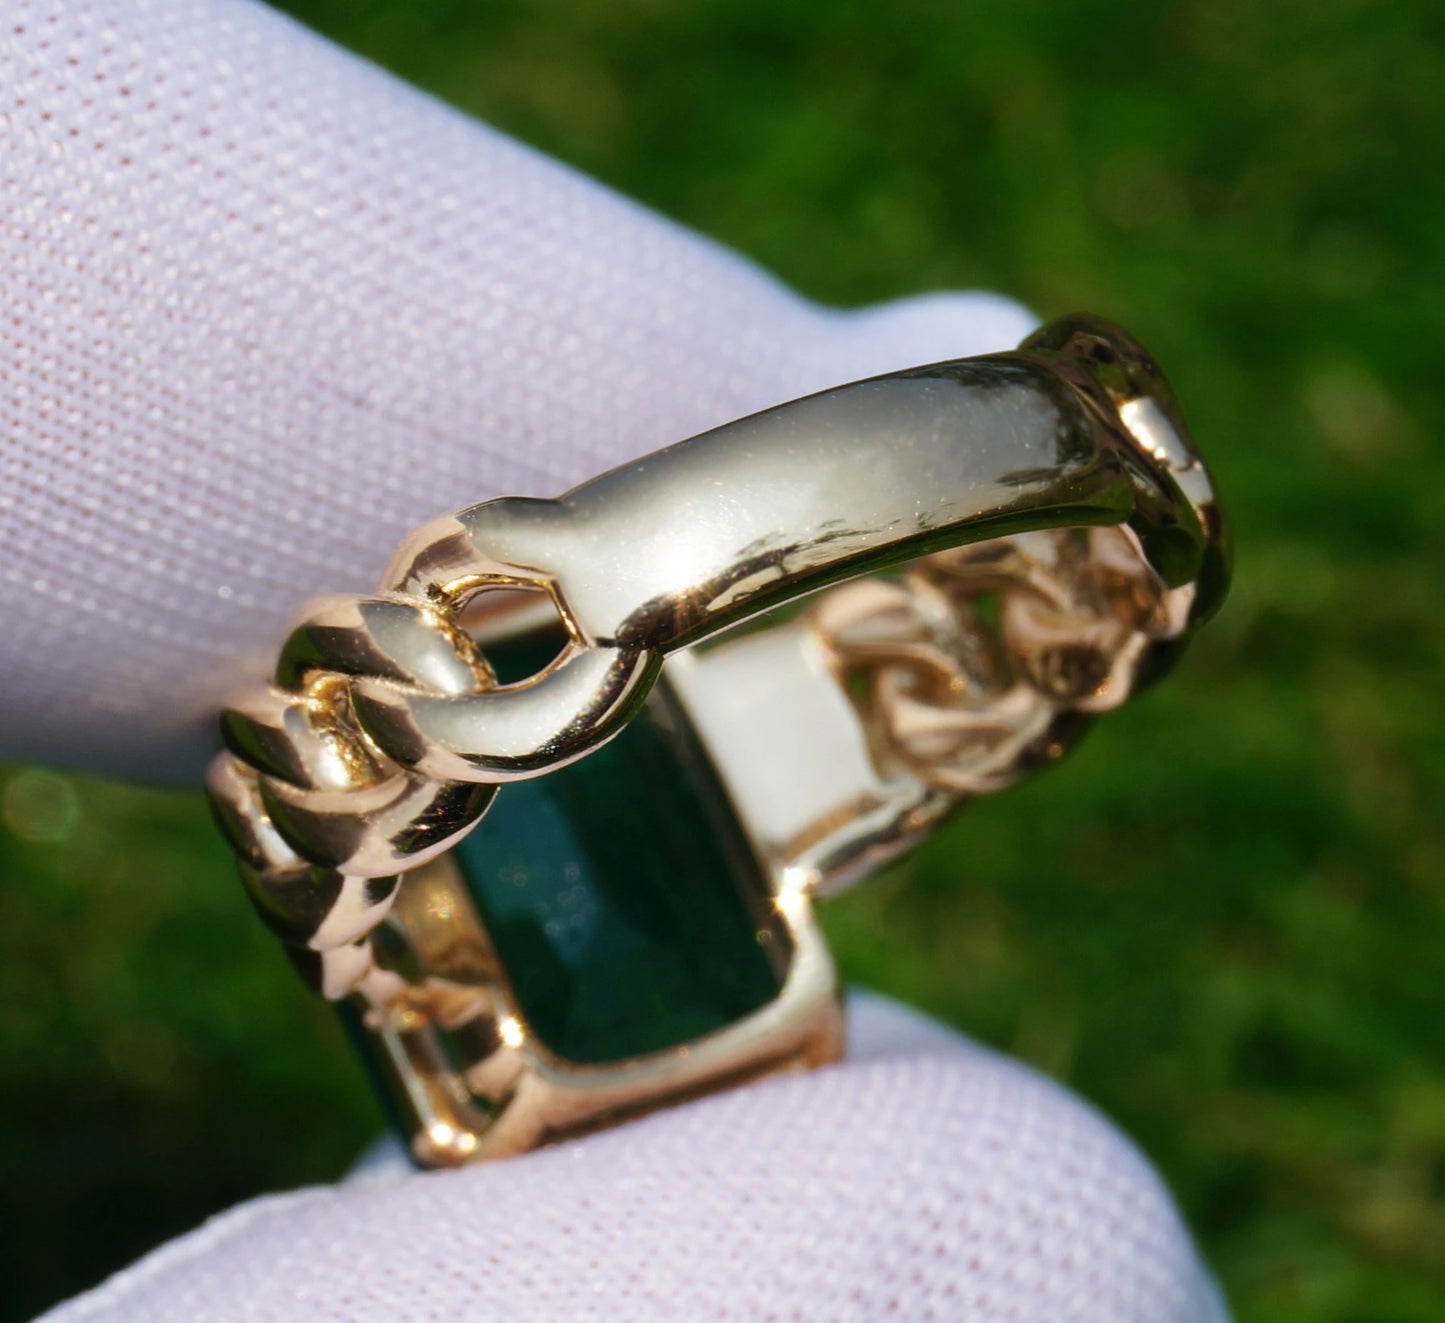 Emerald ring diamond yellow gold 14k octagonal cut 5.89 ctw gia certified